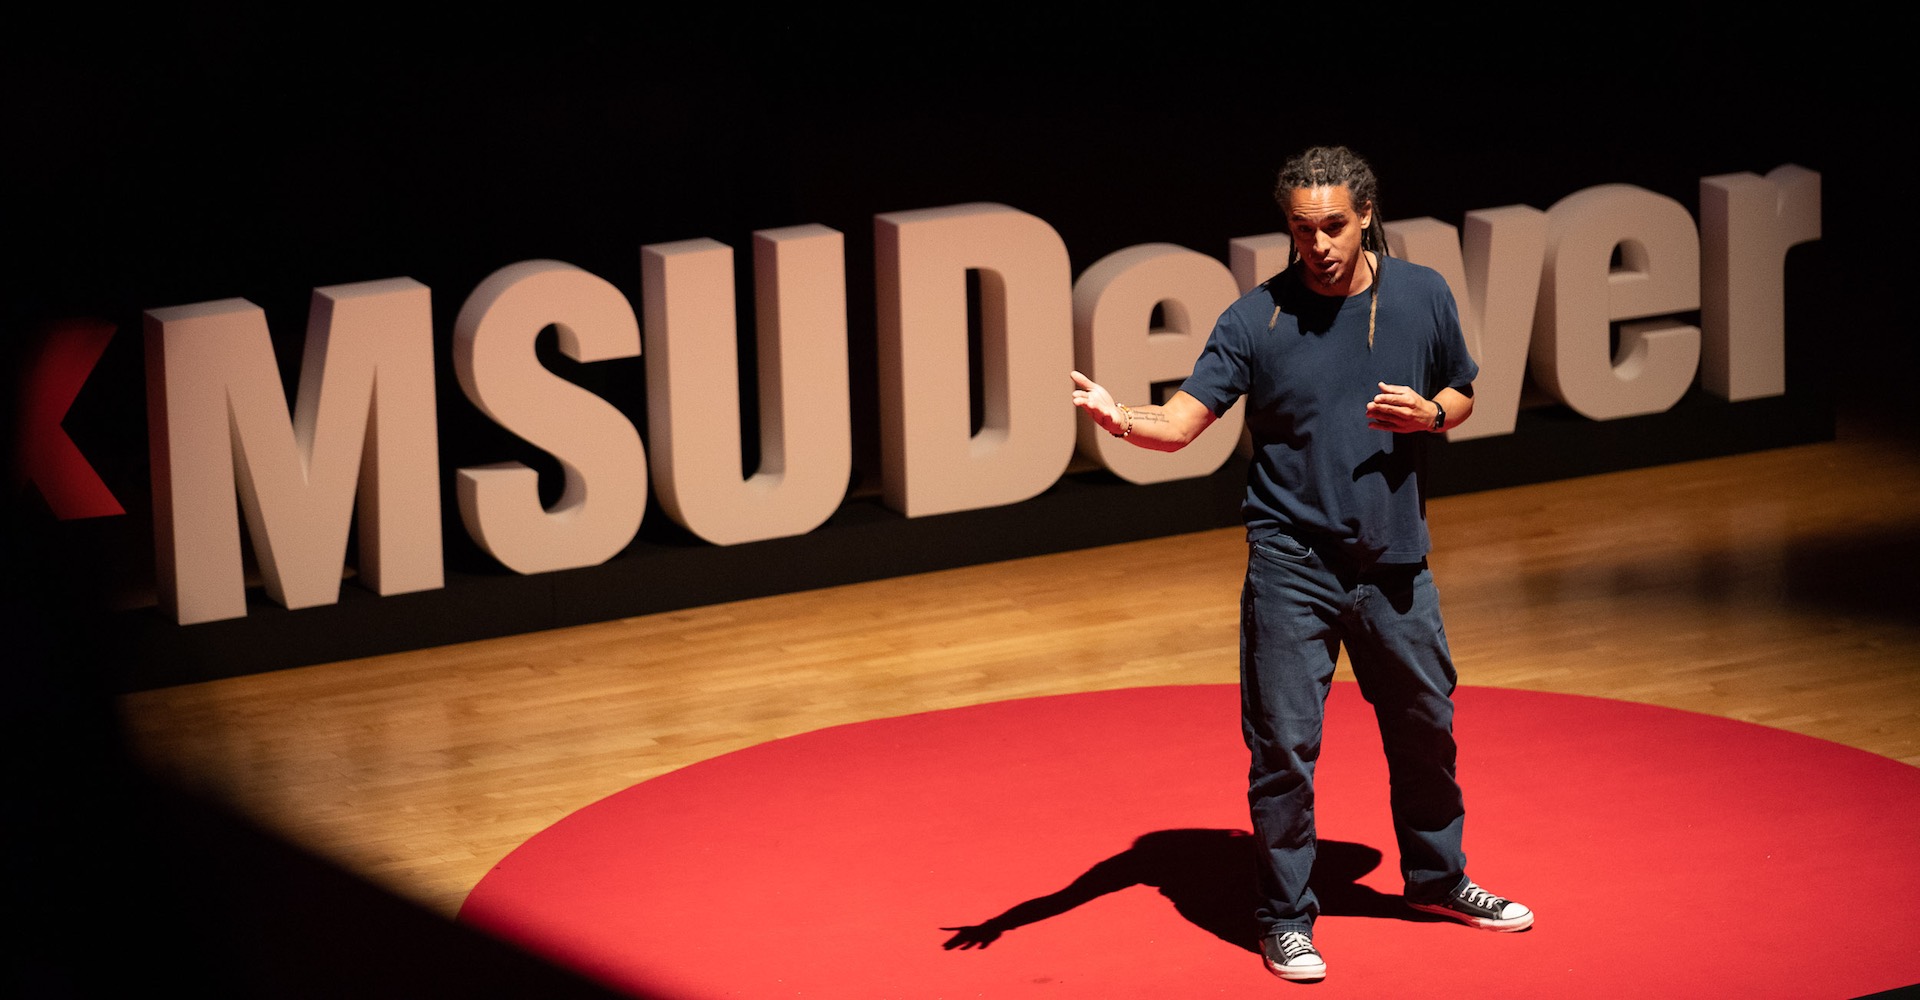 TEDx MSU Denver: Self-care to communities of care